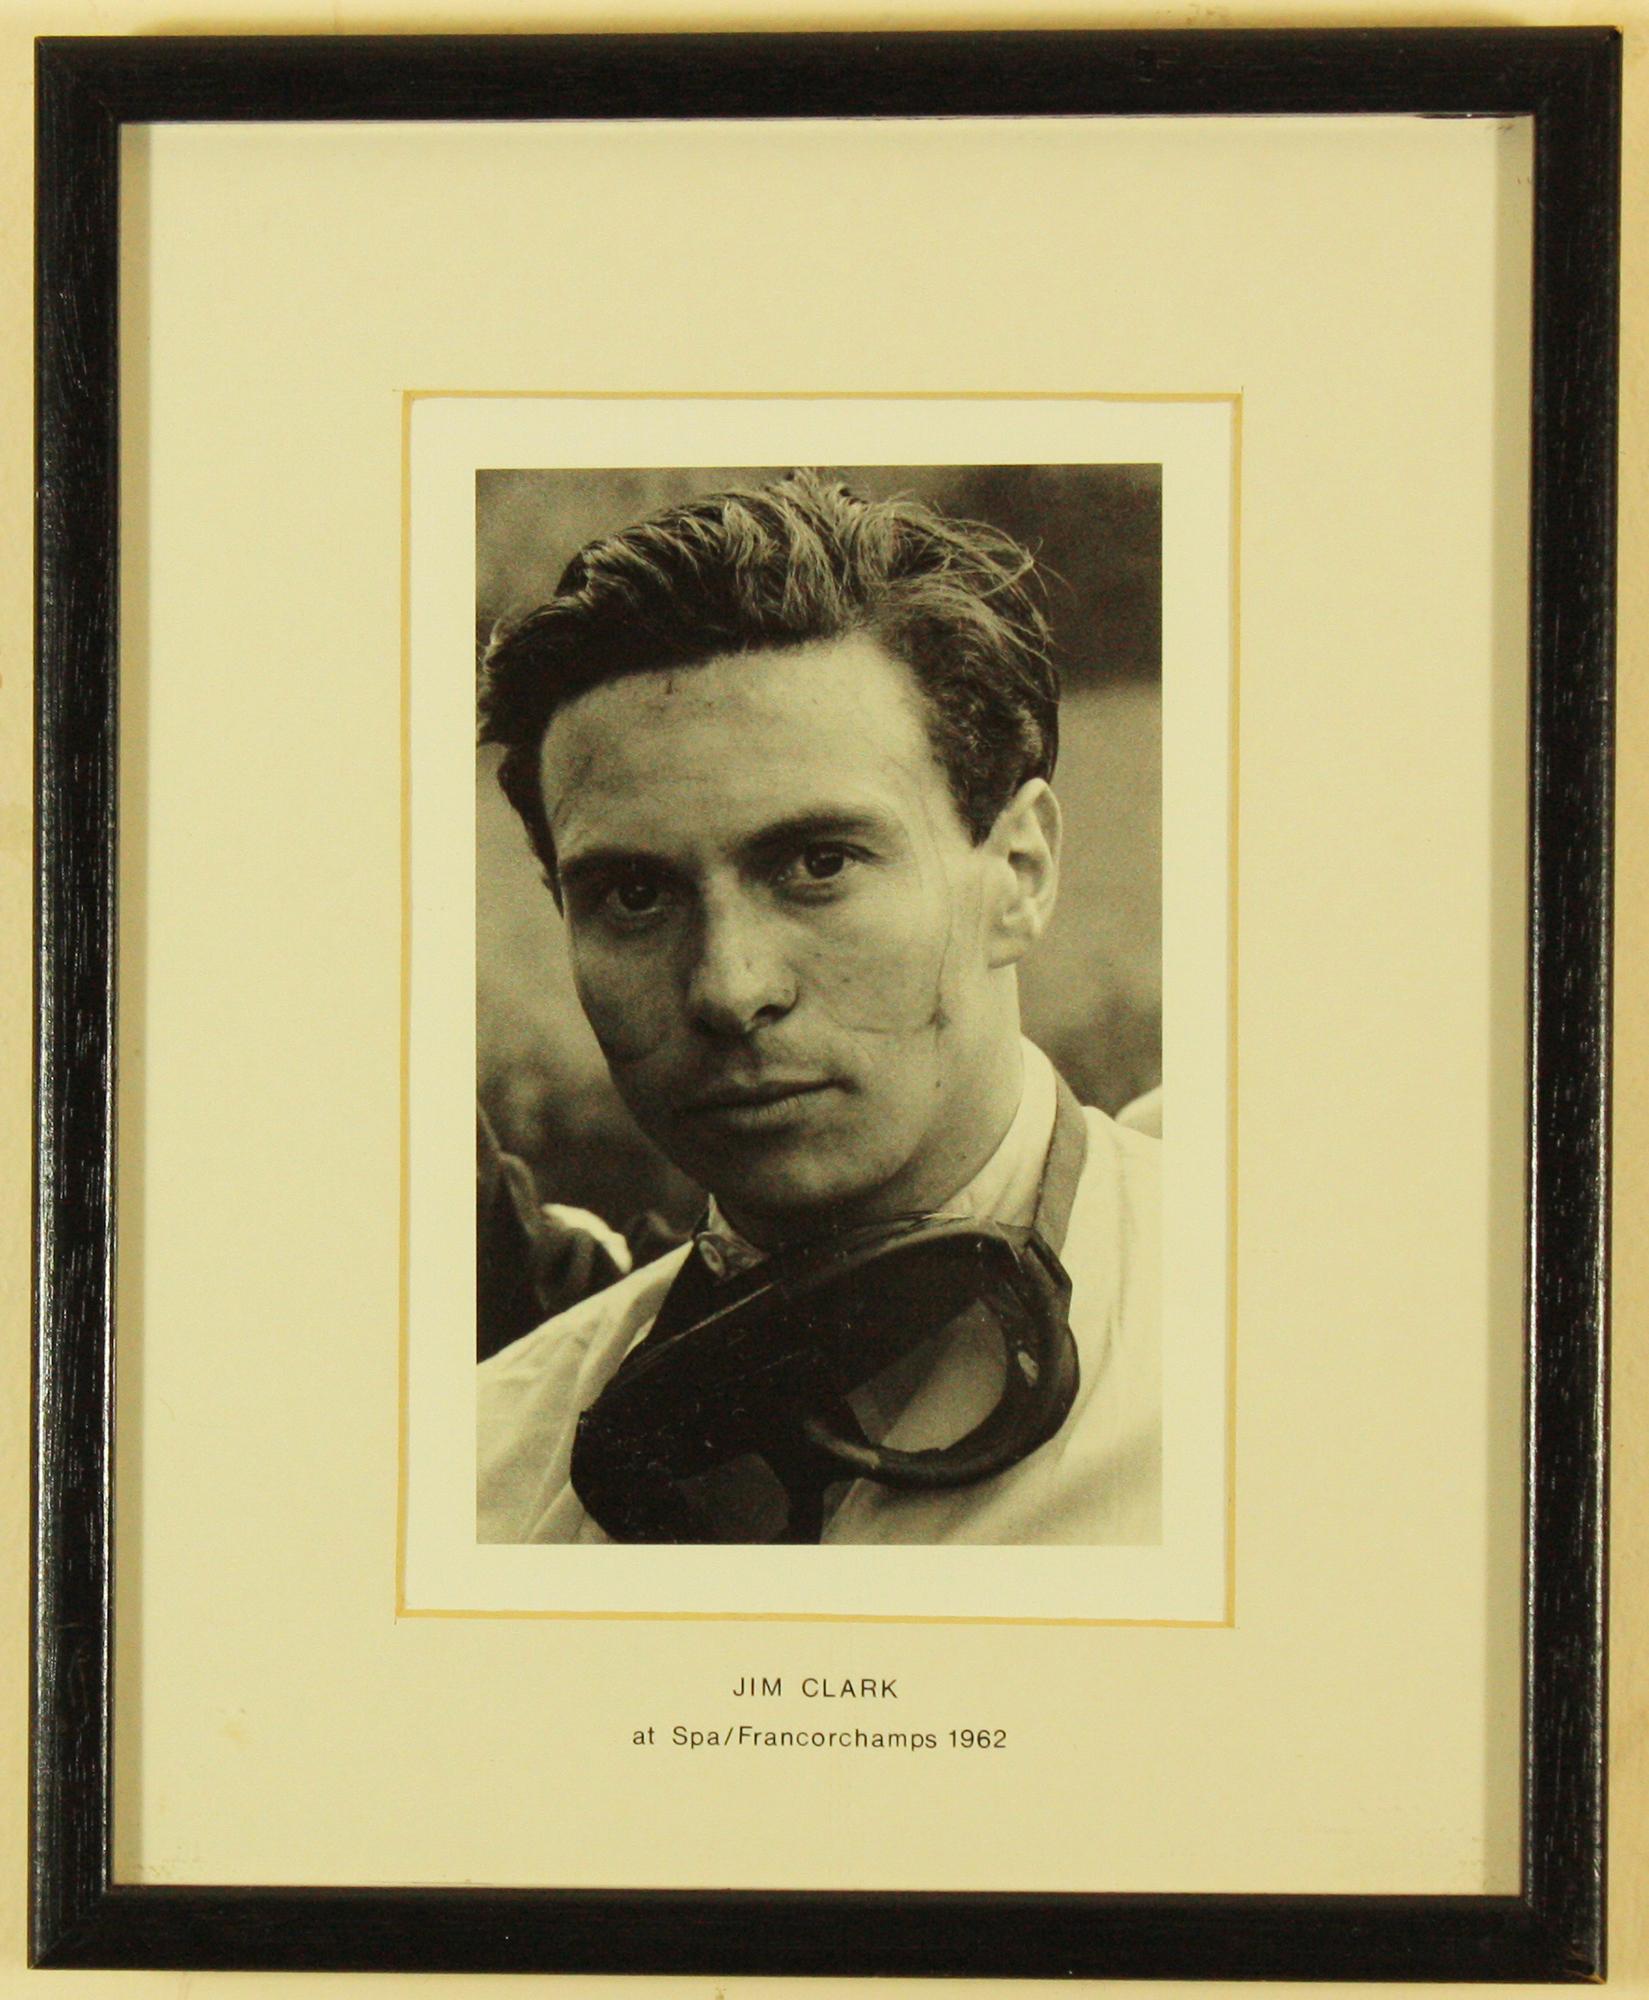 Unknown Portrait Photograph - Jim Clark at the 1962 Belgium Grand Prix